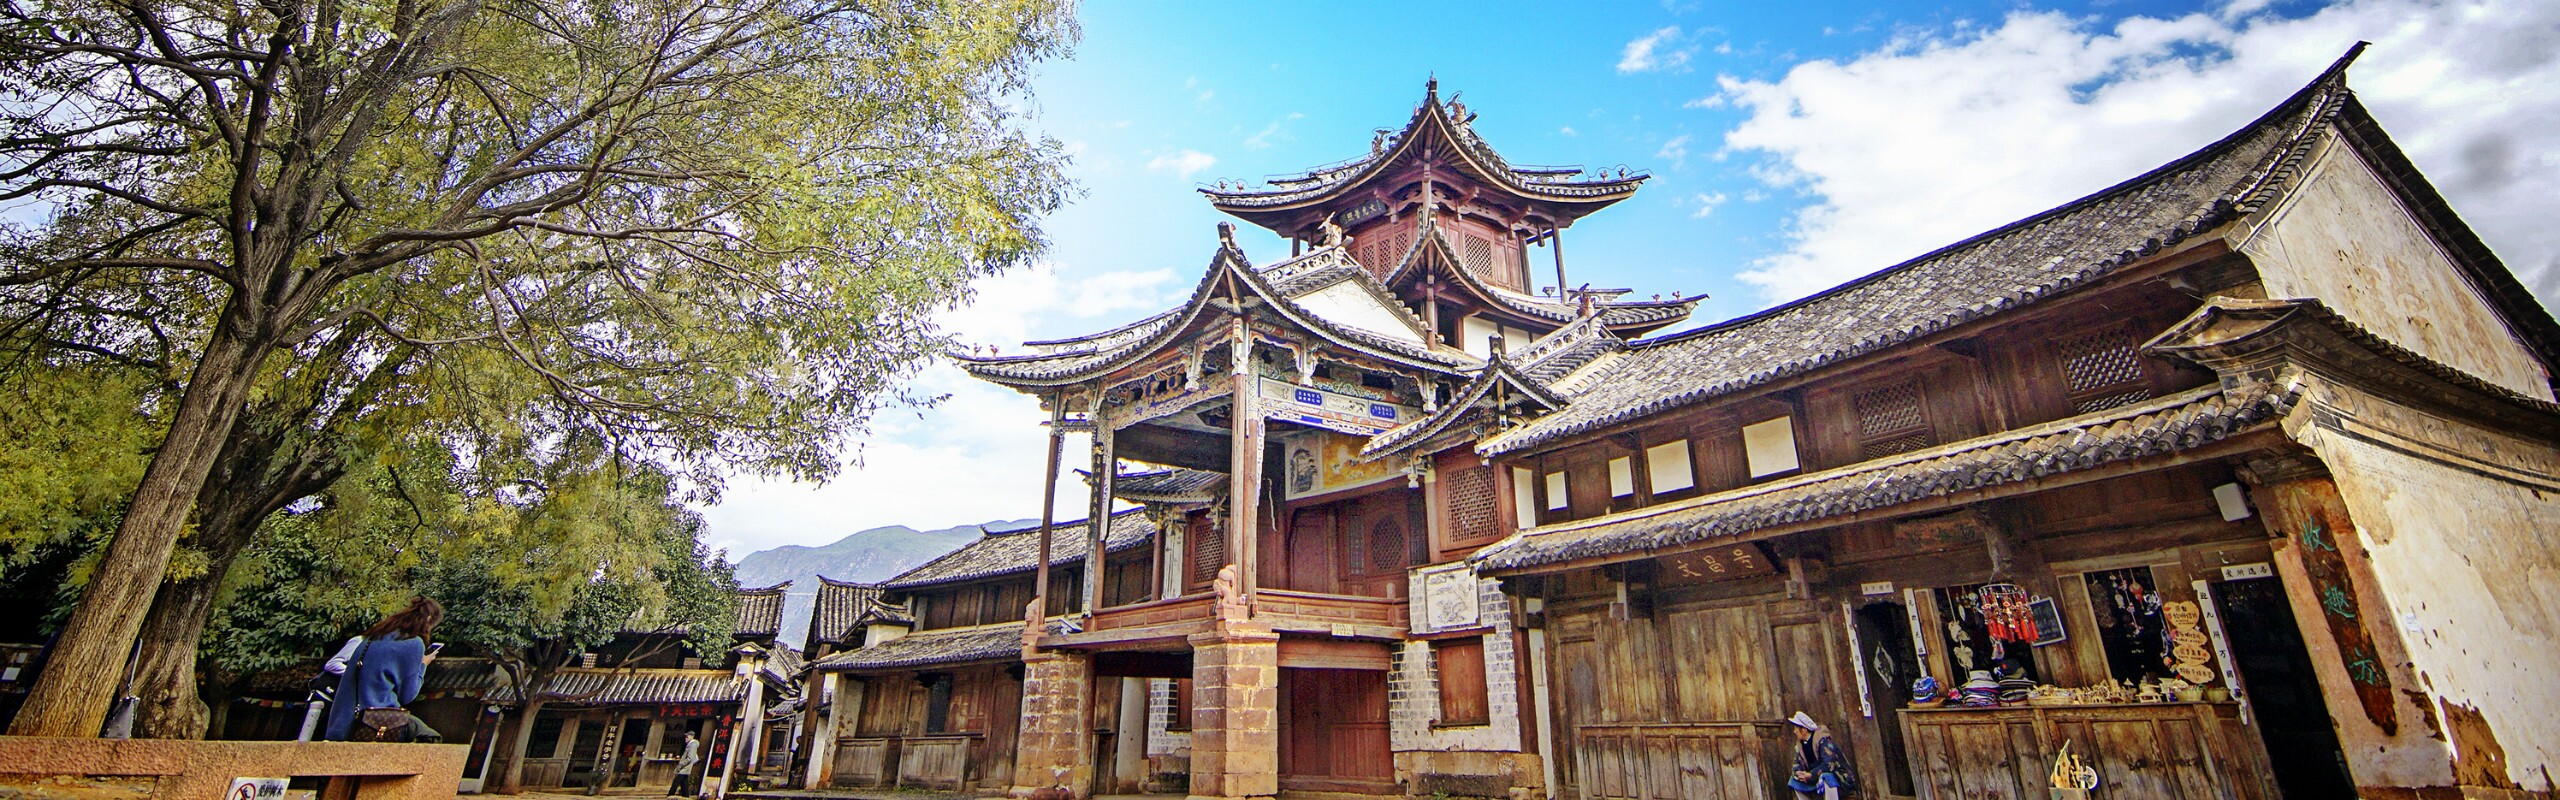 Yunnan Tours - Kunming, Dali, Lijiang, Shangri-la and more!